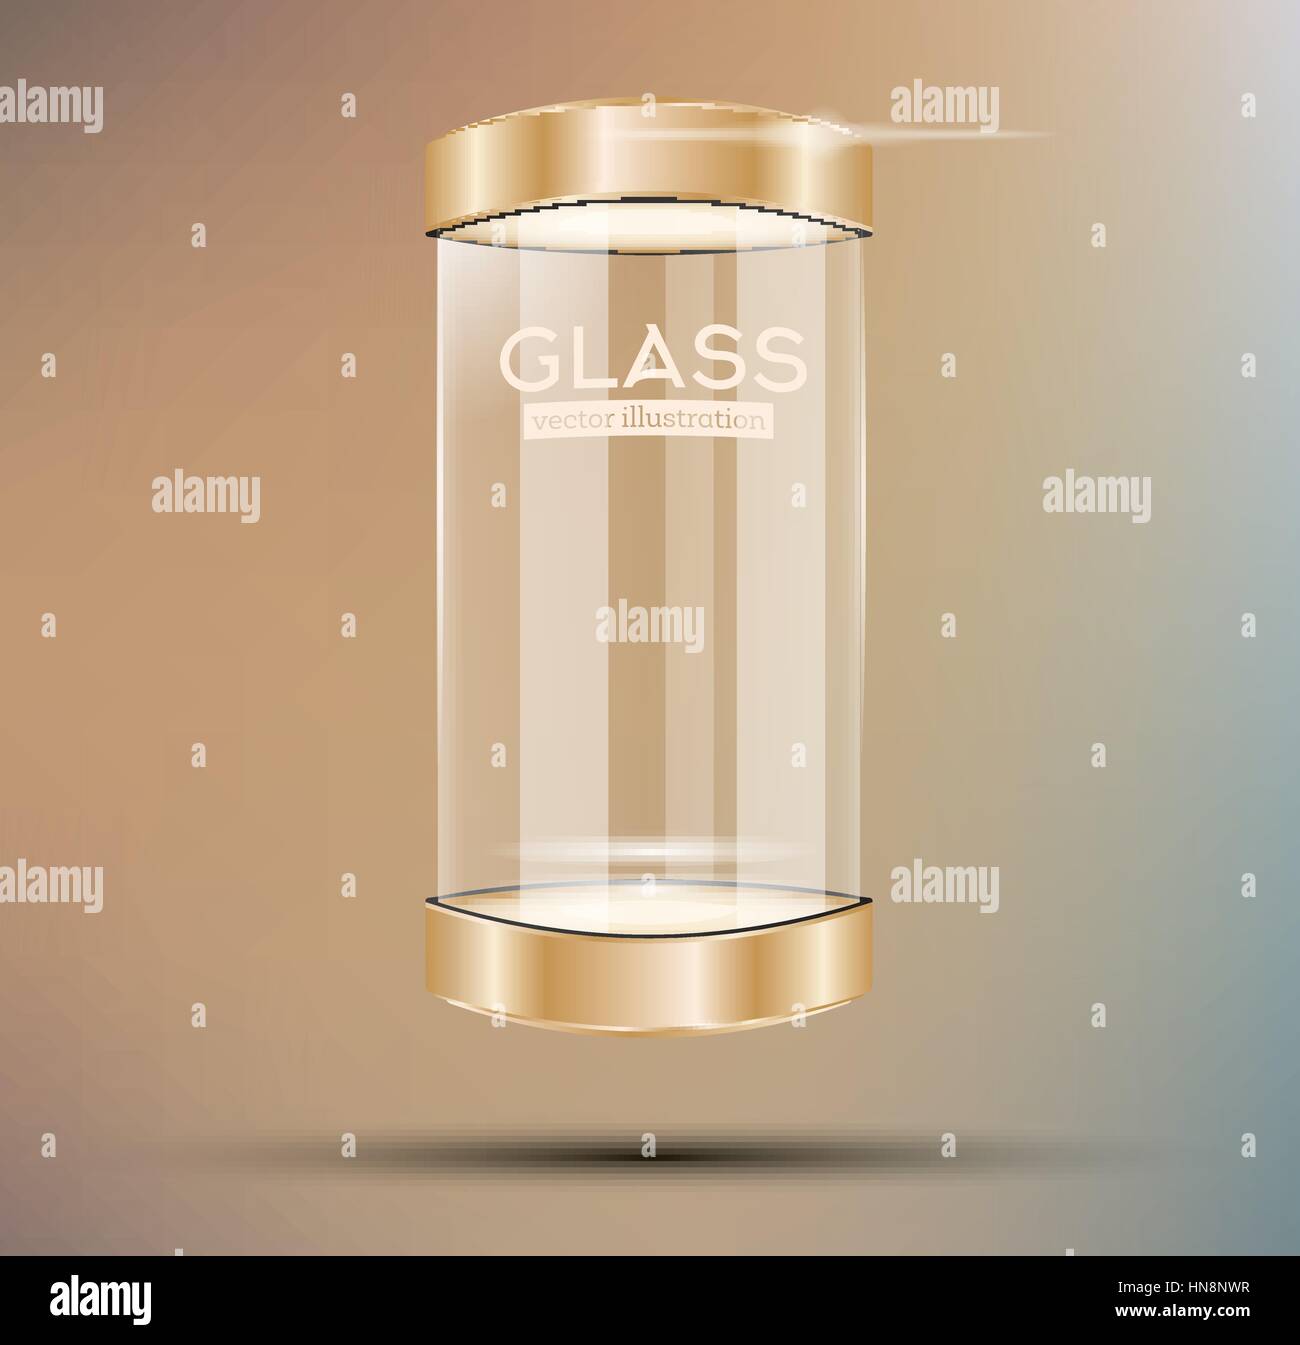 Empty Golden Glass Showcase. Vector Illustration. Stock Vector